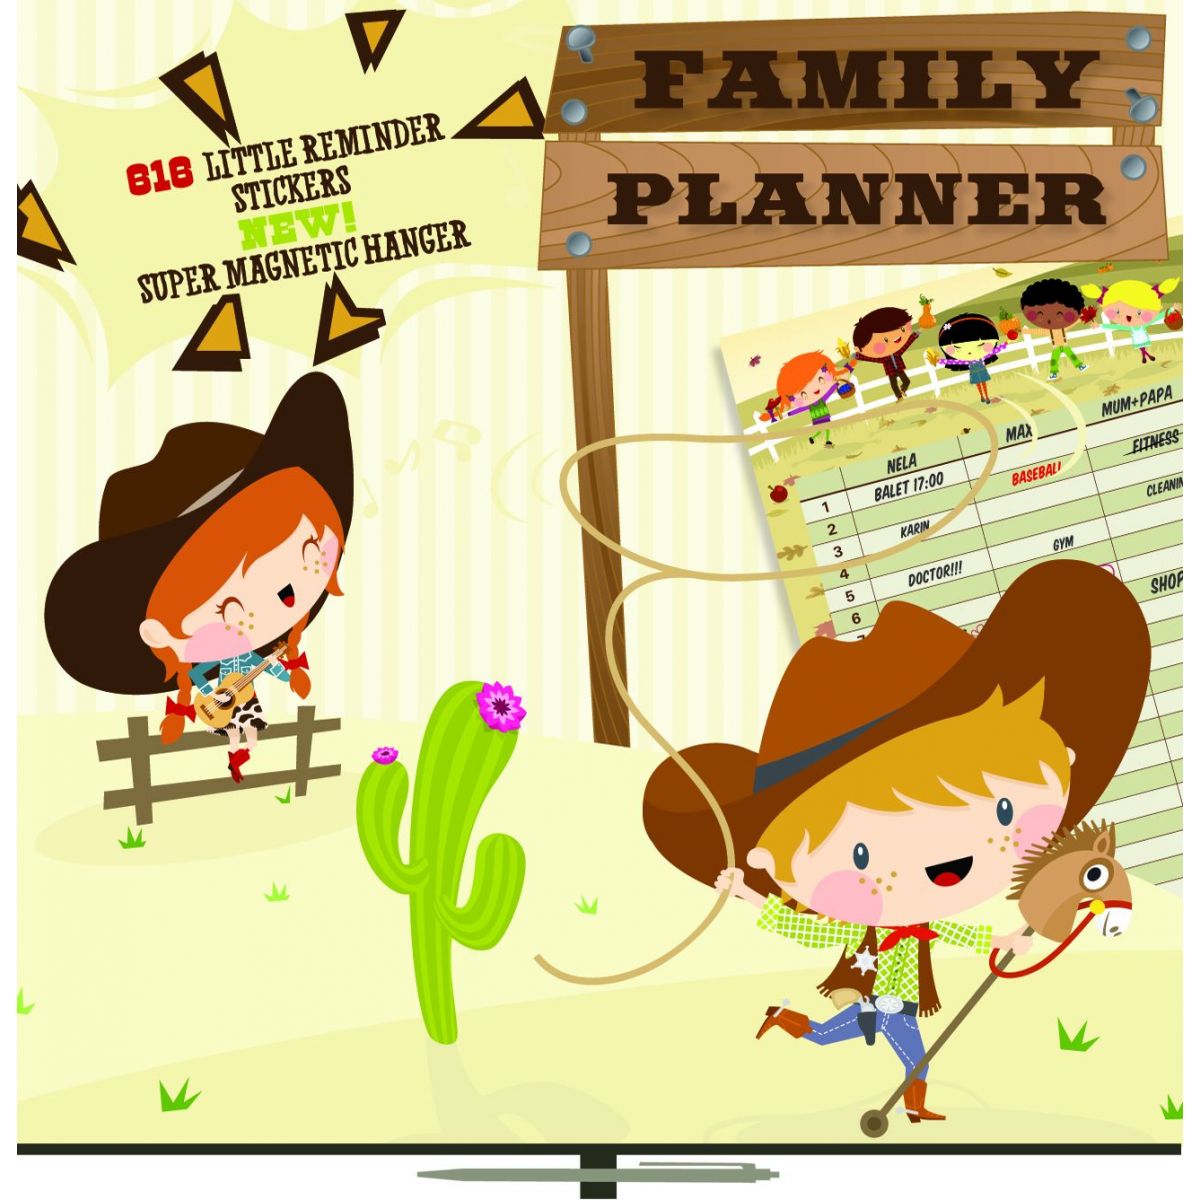 Plánovací Cowboys, poznámkový kalendář 2013, 30 x 60 cm